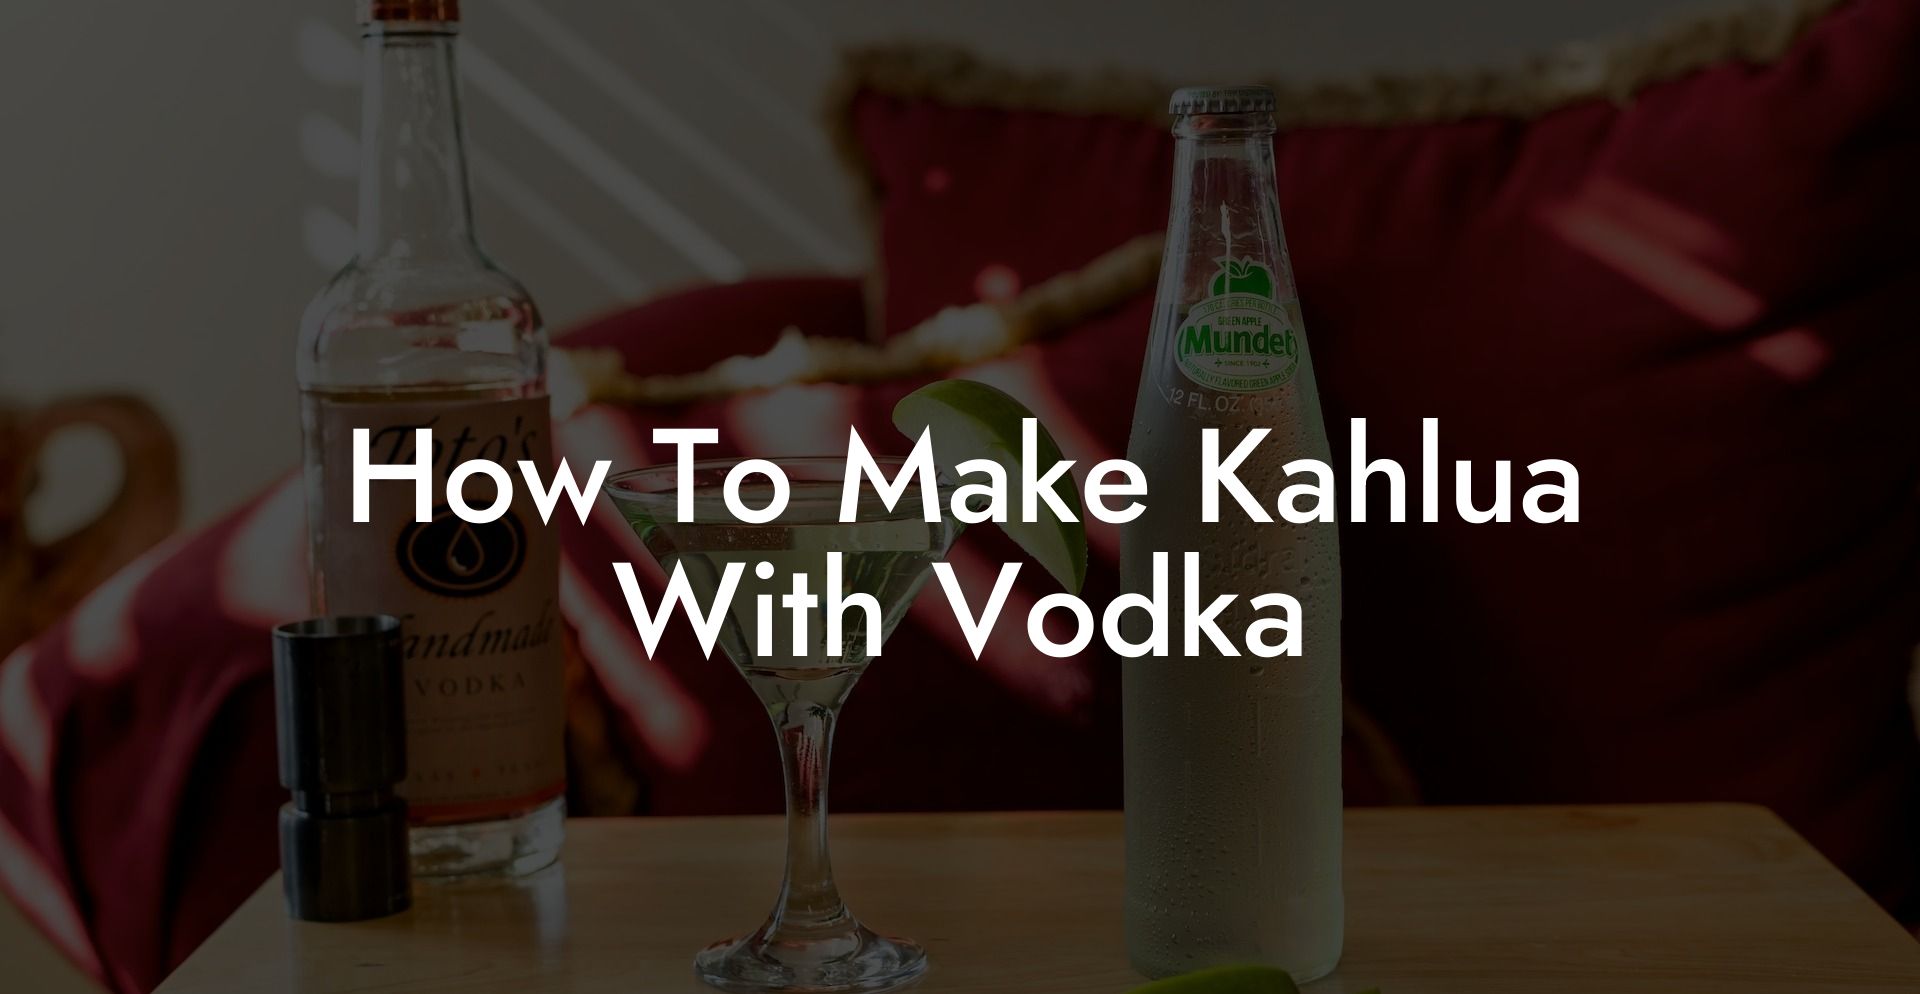 How To Make Kahlua With Vodka